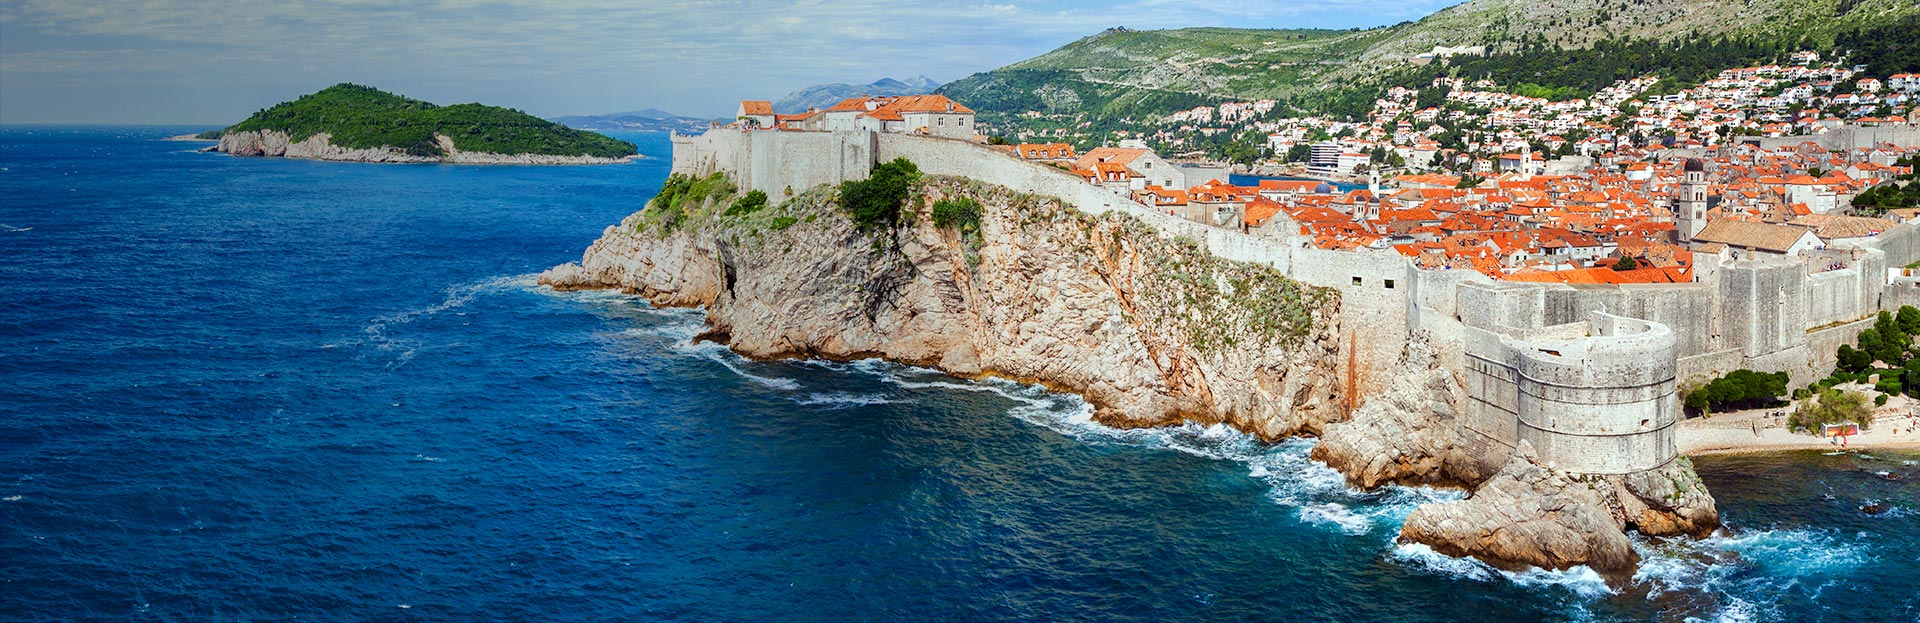 Croatia Cityscape 